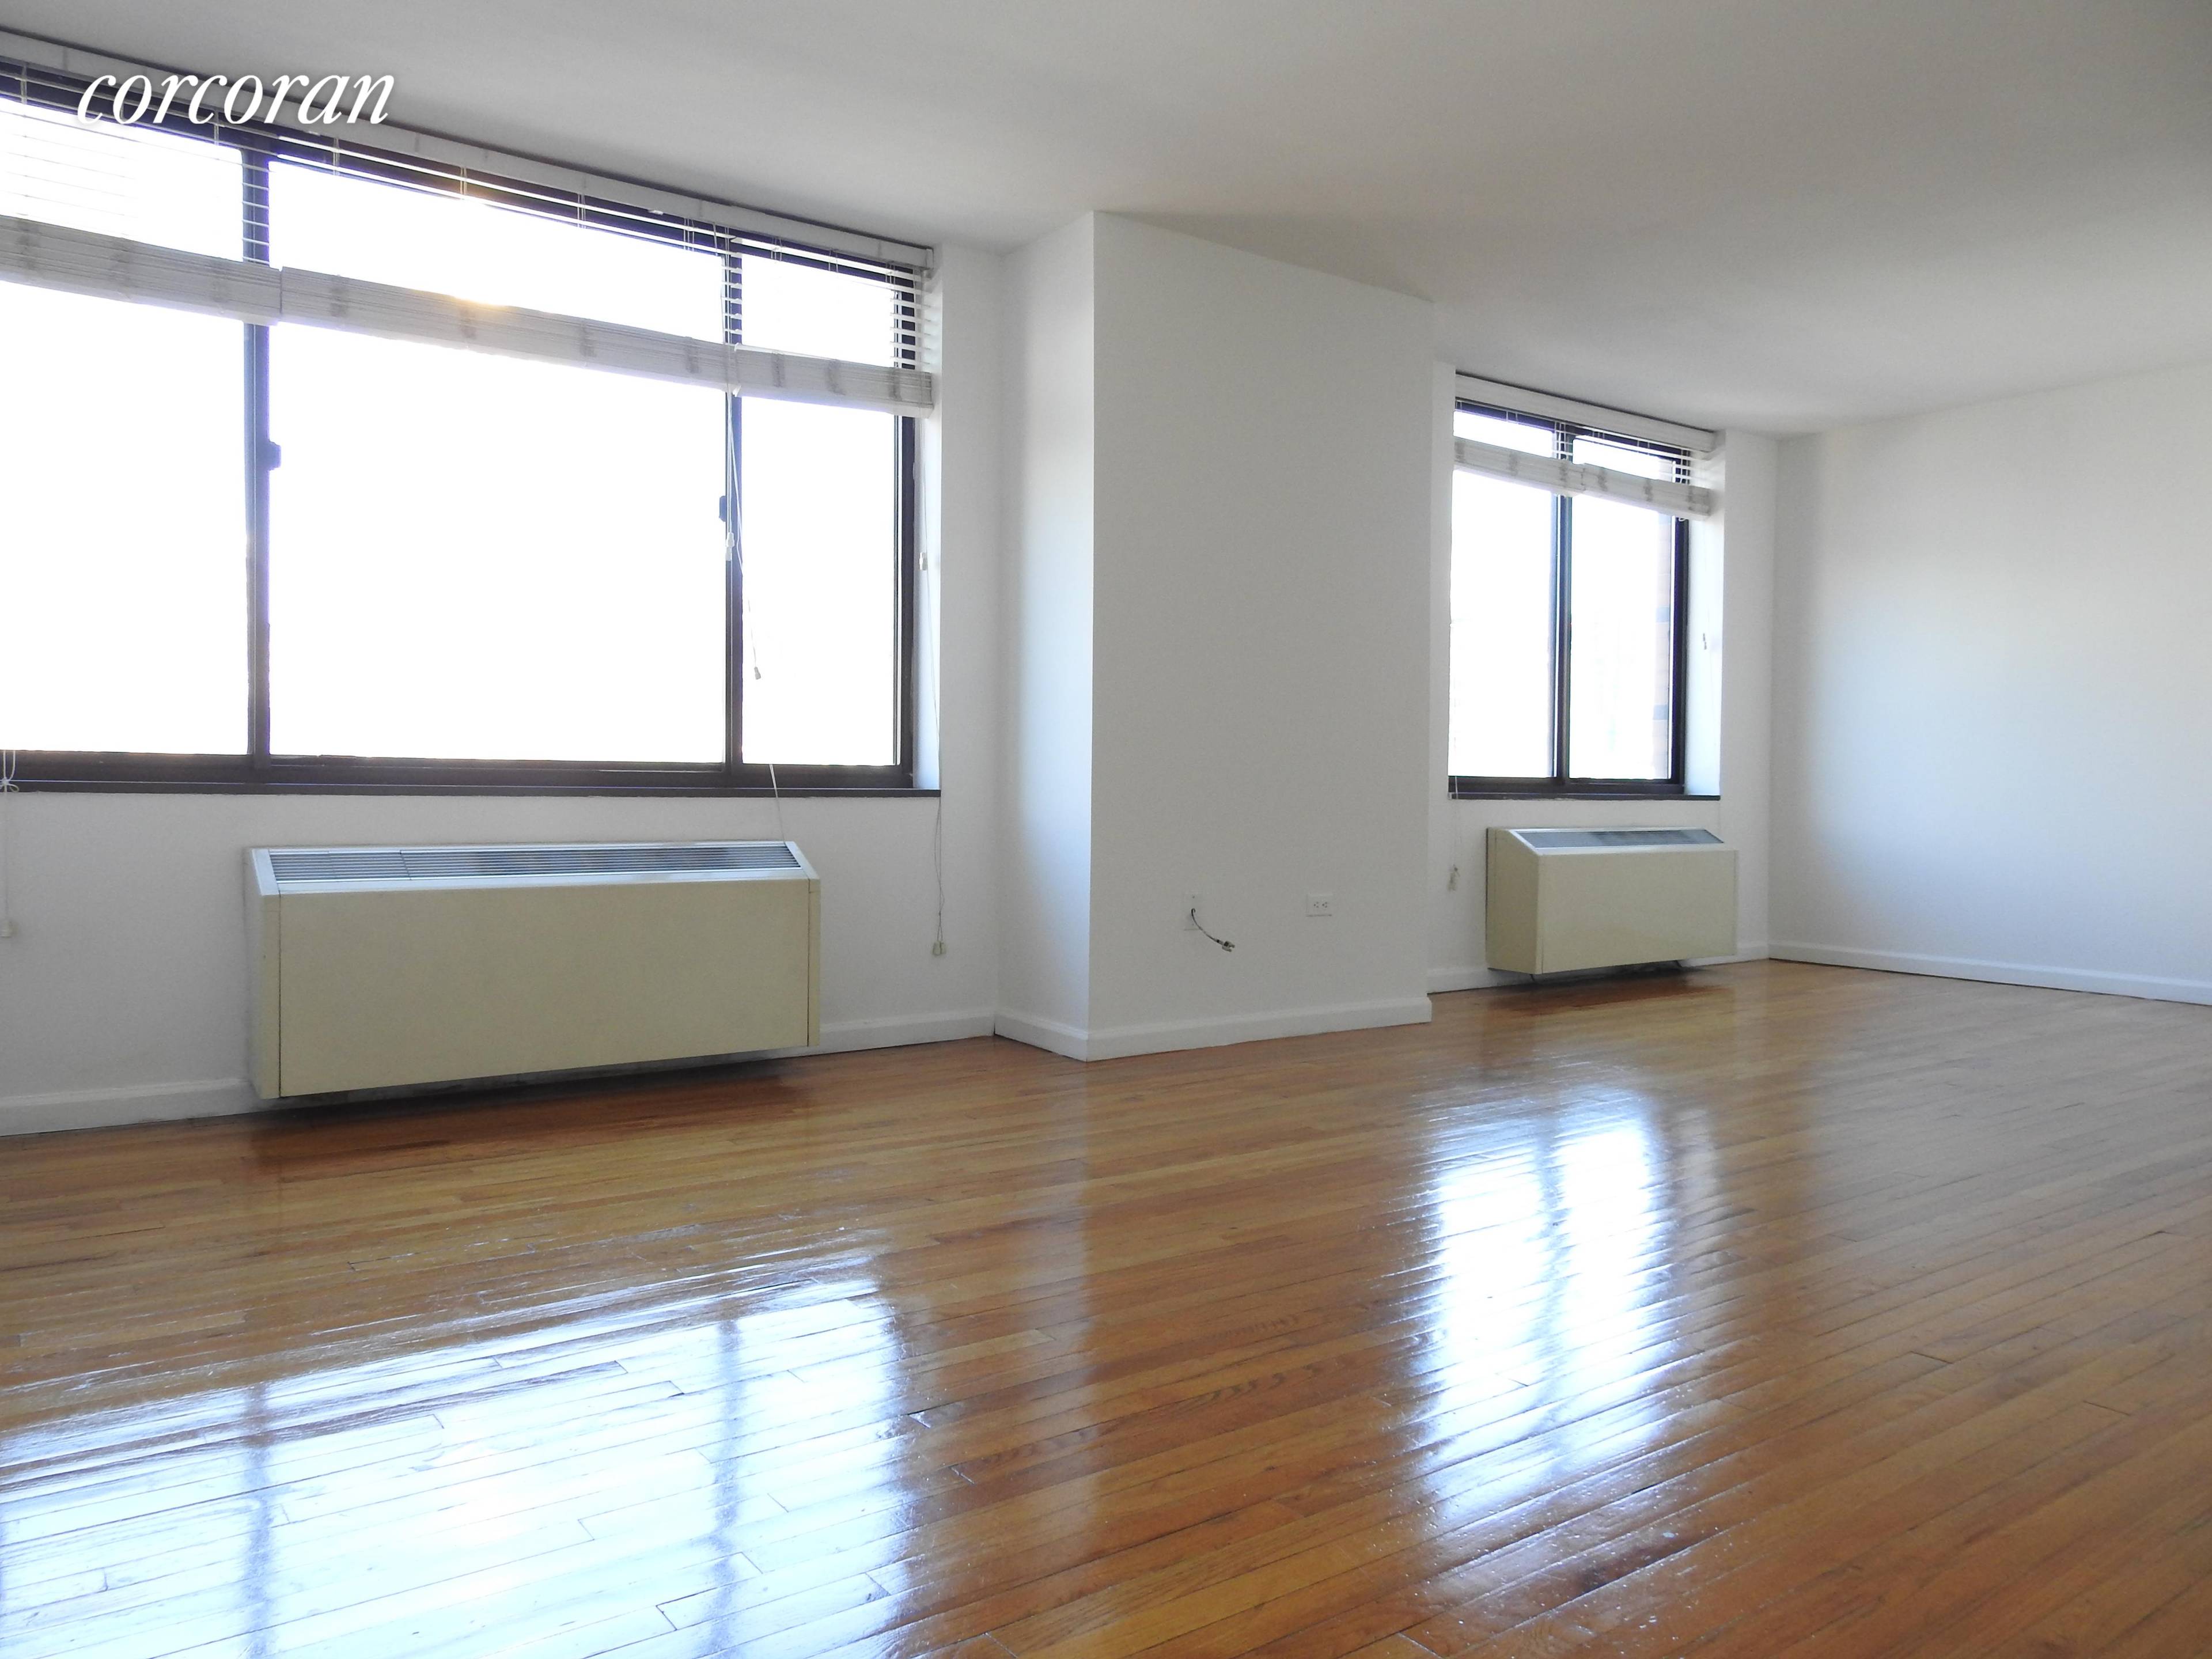 Large CHARMING Studio. This quiet apartment boasts sparkling hardwood floors, 2 closets.